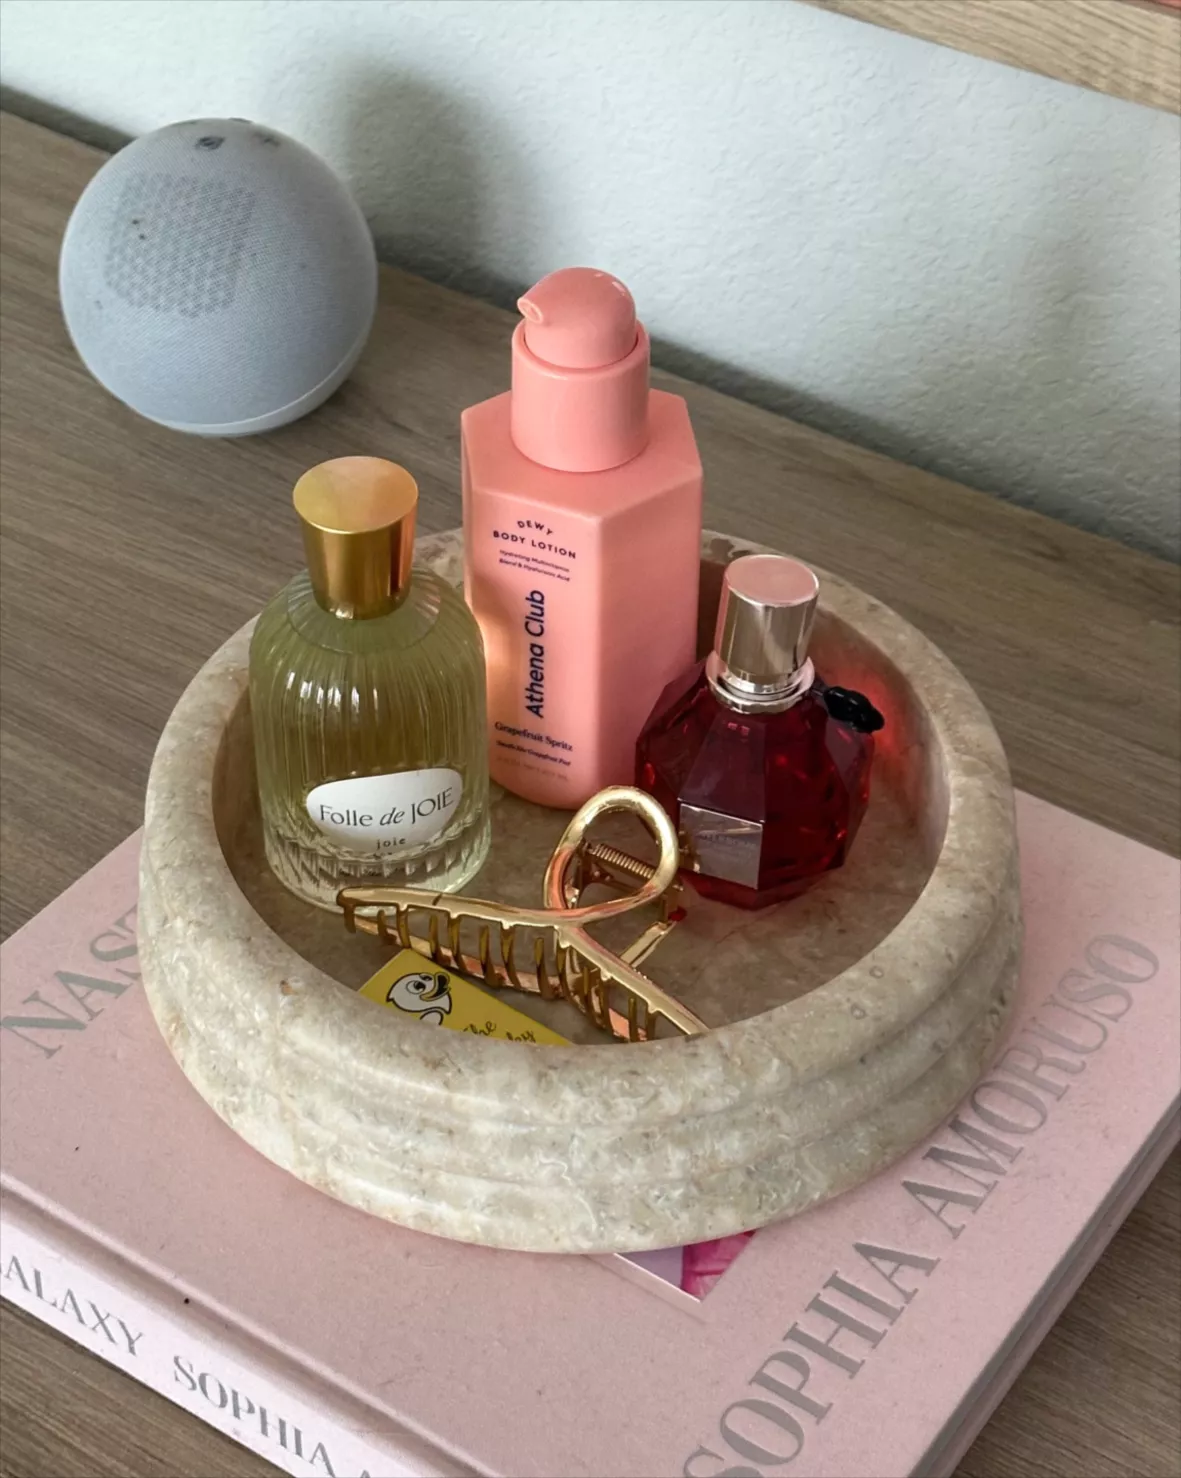 Good Girl Blush Eau de Parfum - … curated on LTK